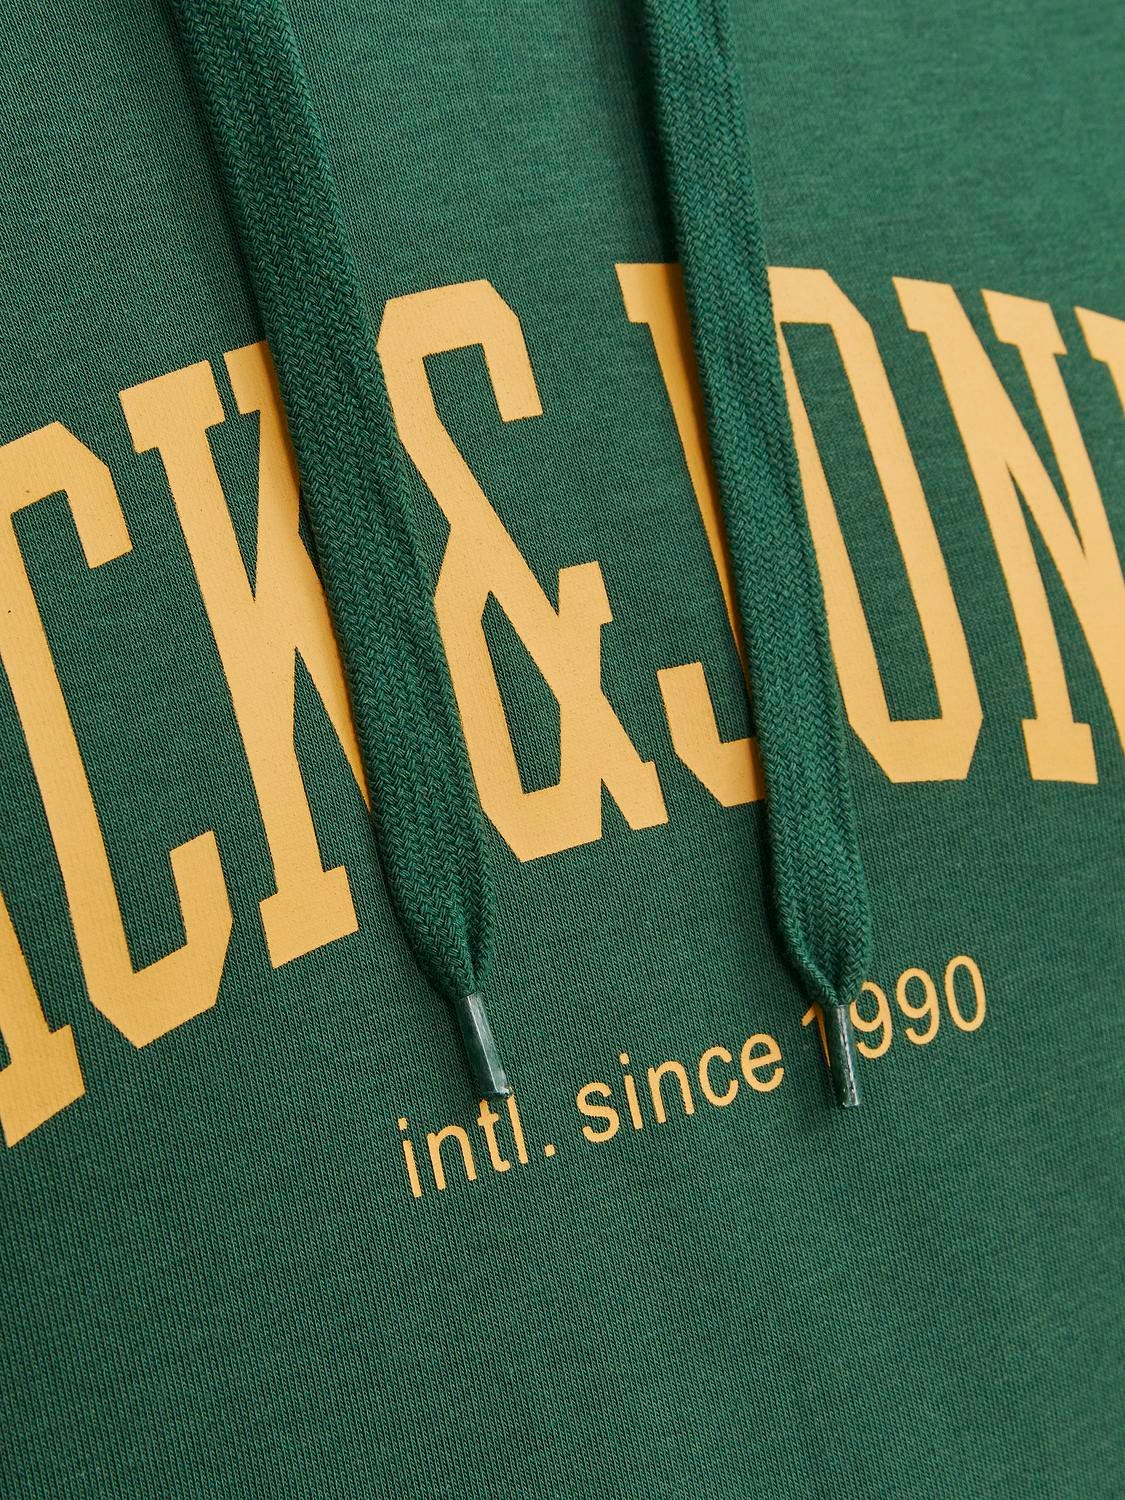 Jack & Jones Logo Huppari -Dark Green - 12236513